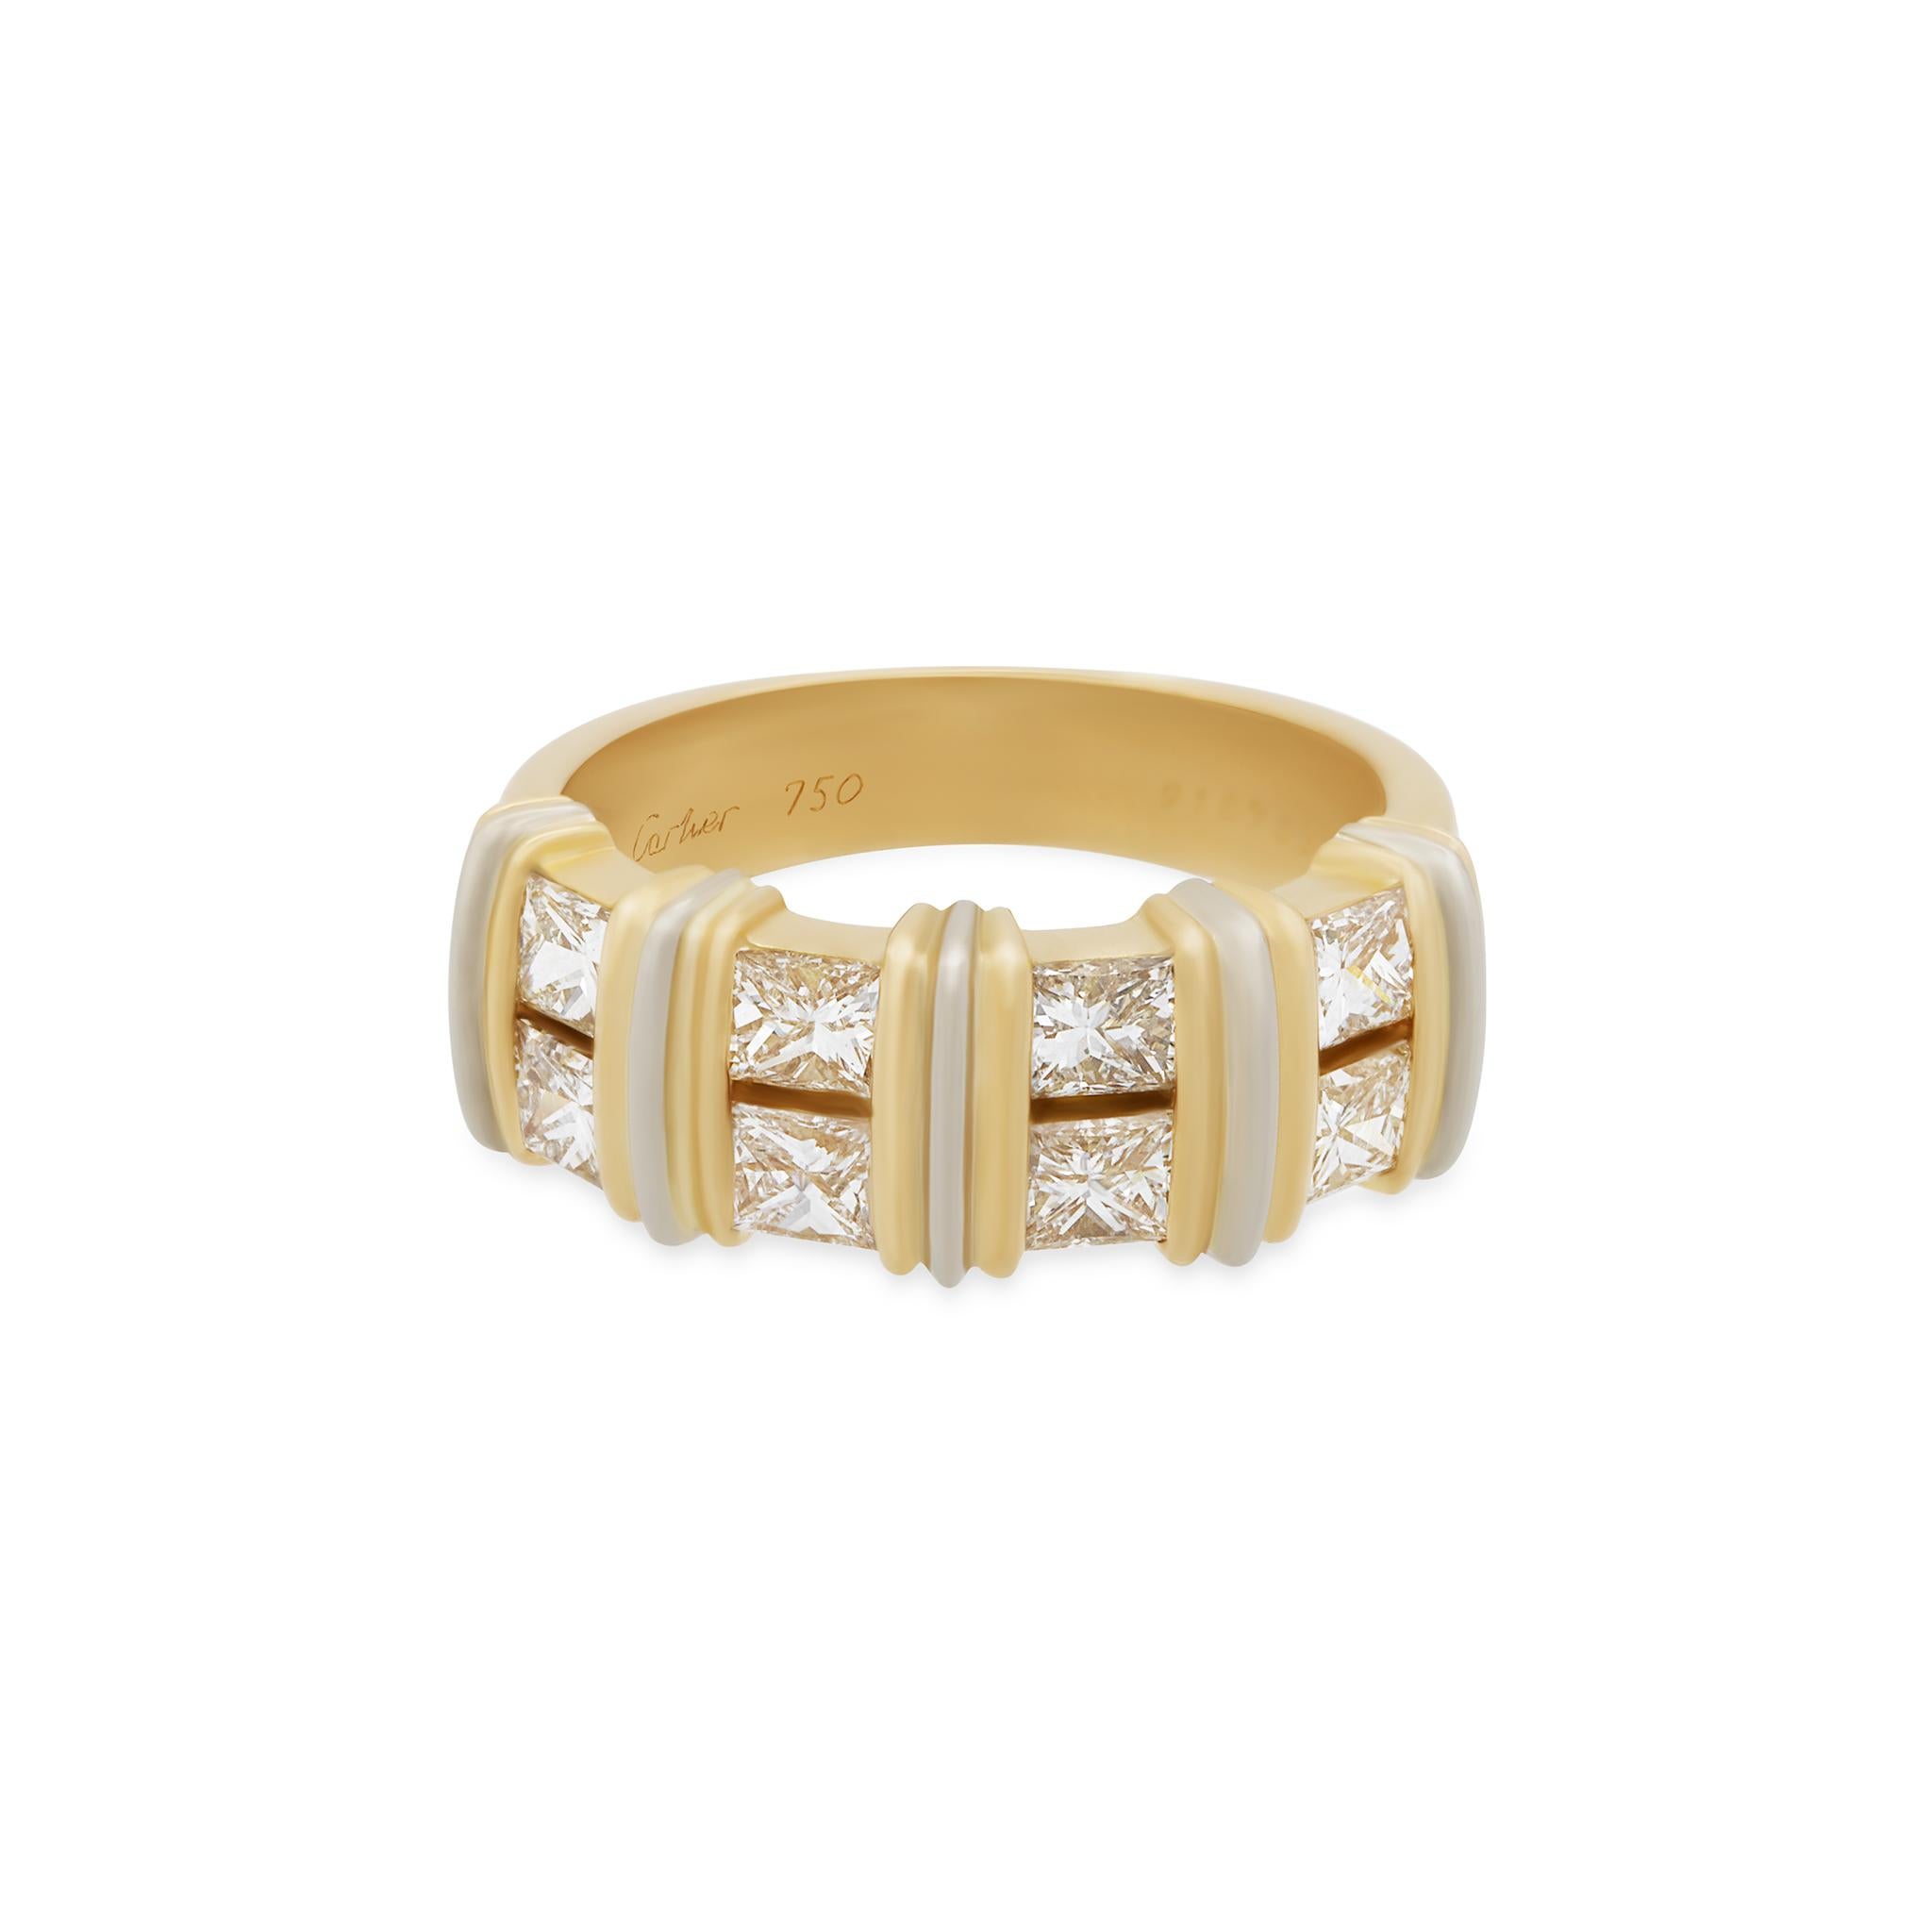 Cartier 18 Karat Yellow and White Gold Princess Cut Diamond Ring 1